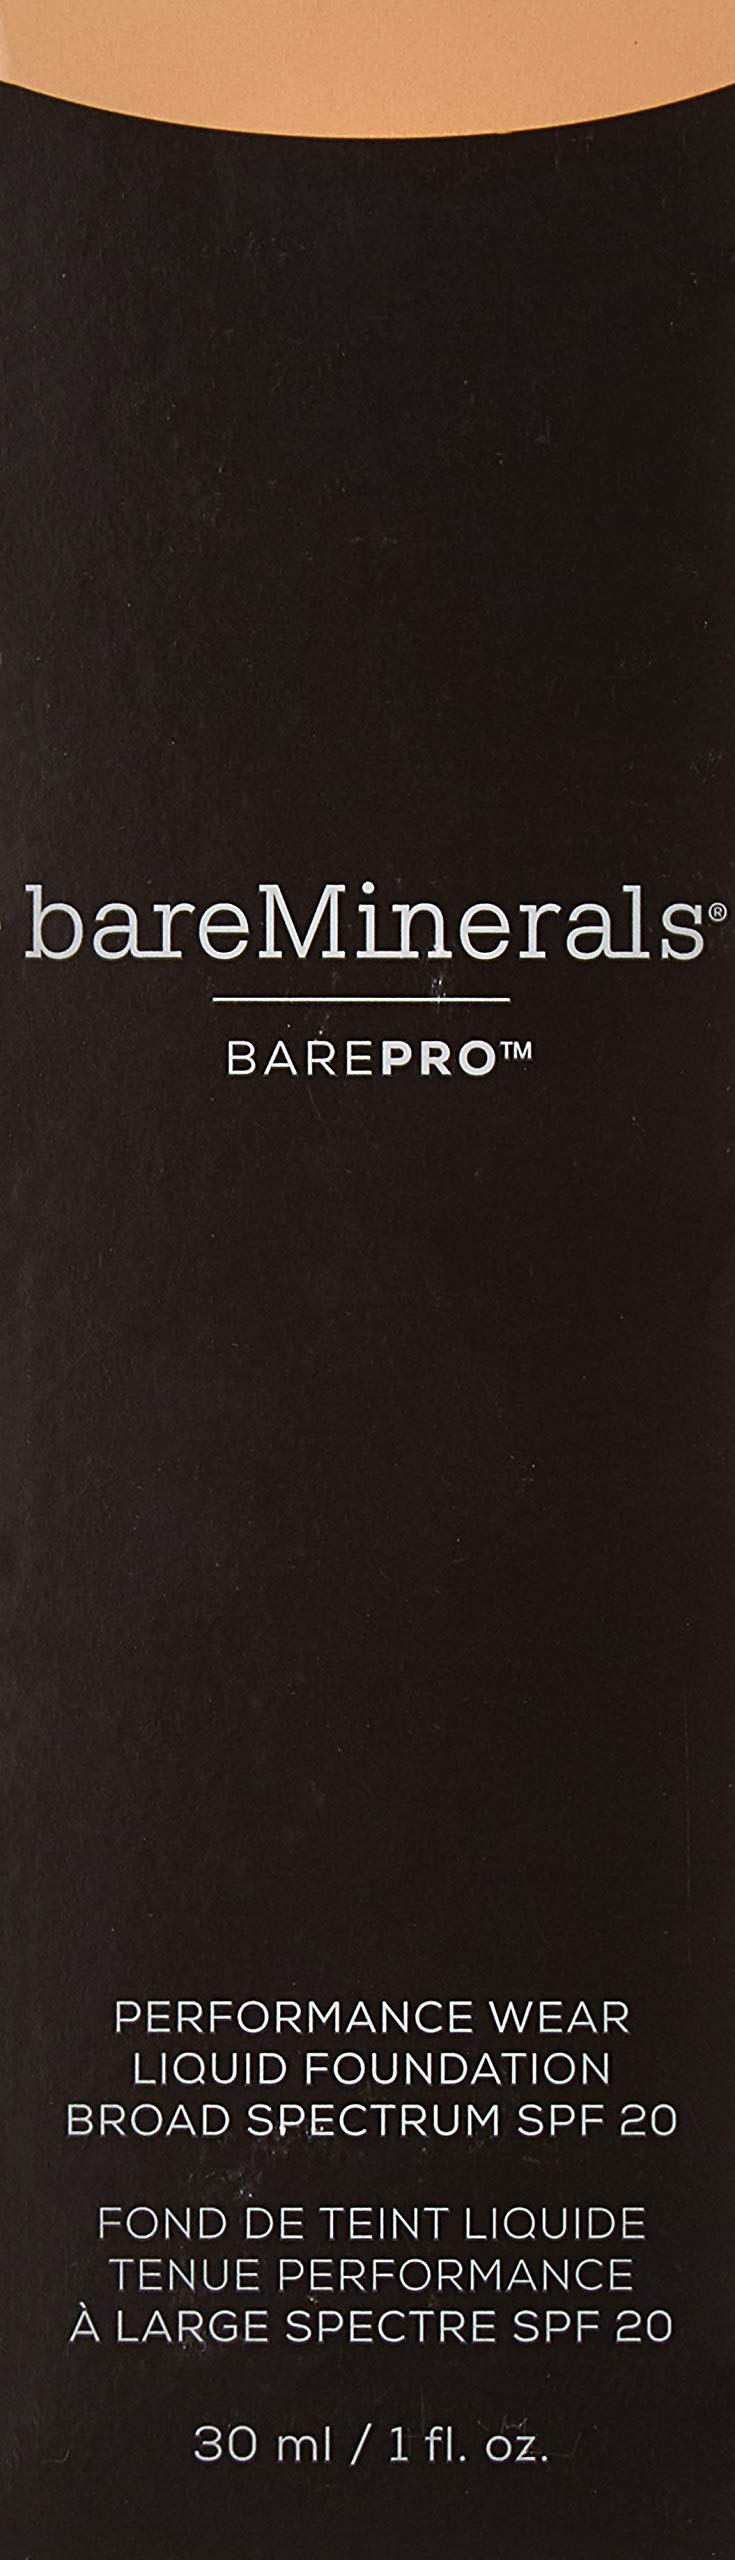 [Australia] - bareMinerals Barepro Perf Wear Liquid Fndtn SPF 20 Pecan 18 30ml 